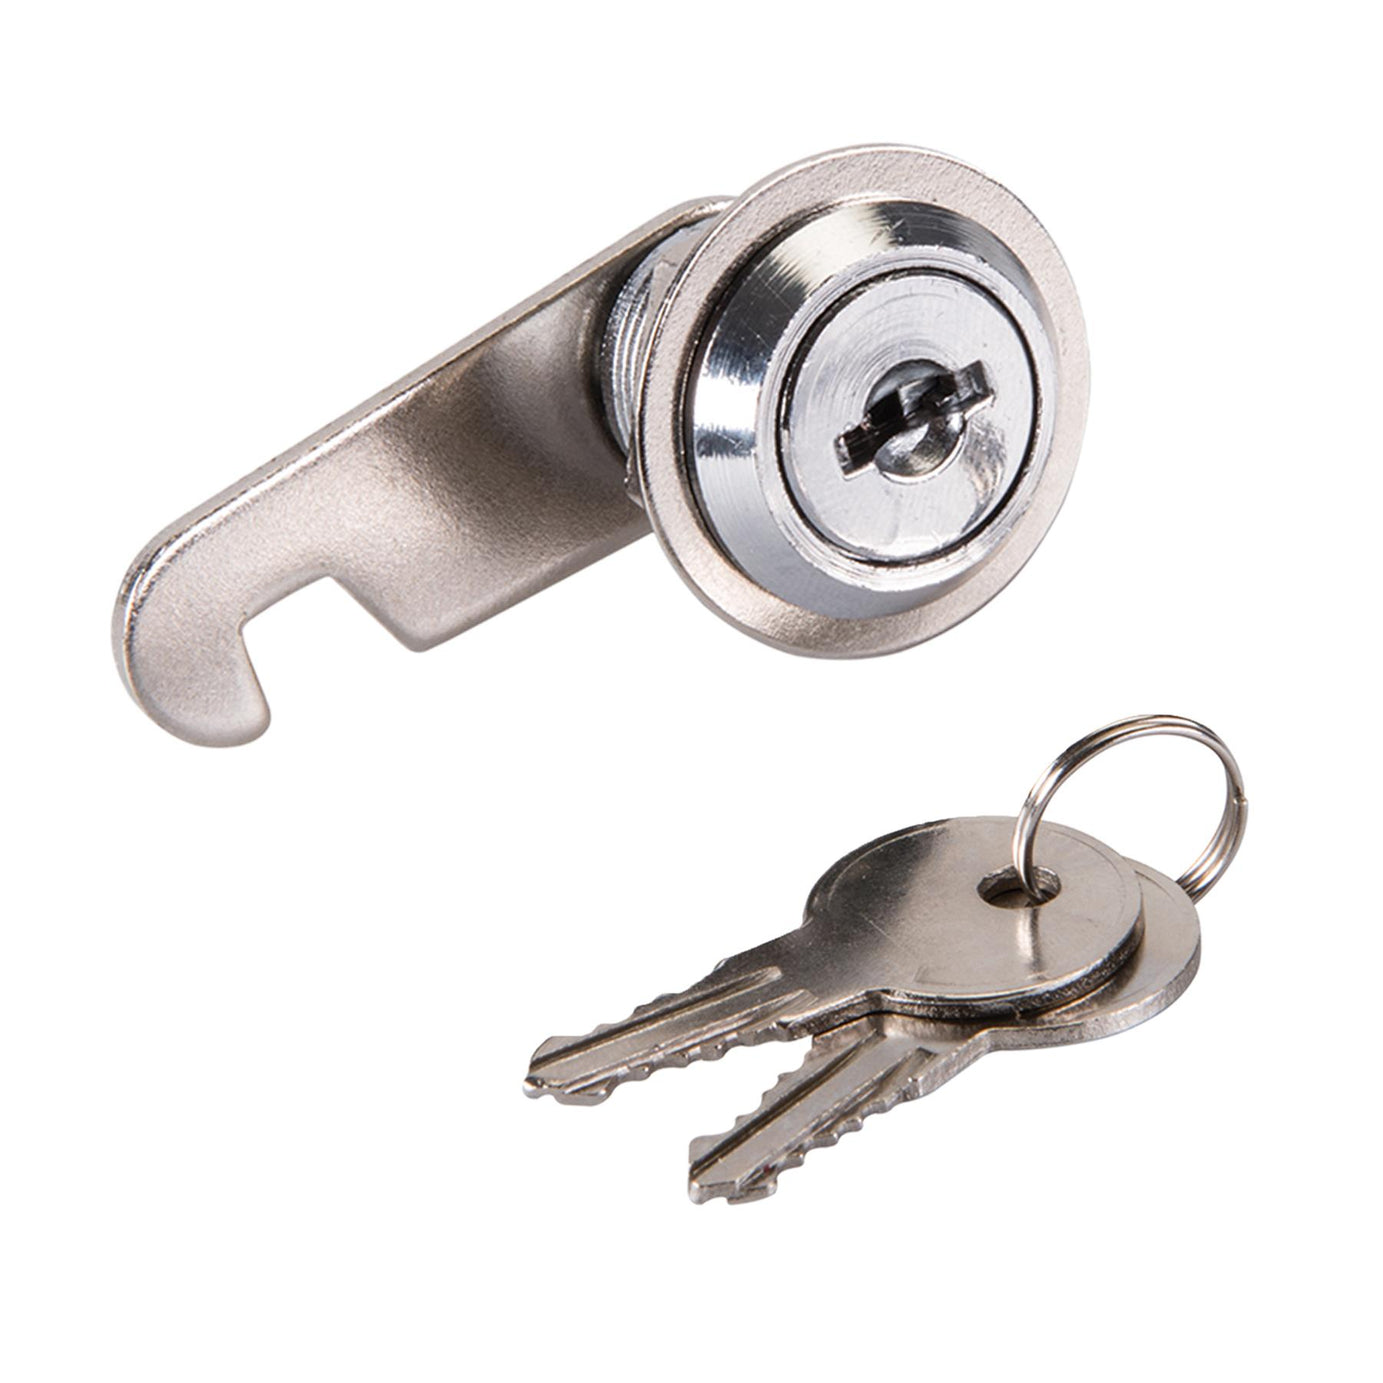 32mm Cam Lock For Filing Cabinet Mailbox Drawer Locker Secure Keys Nickel Plated